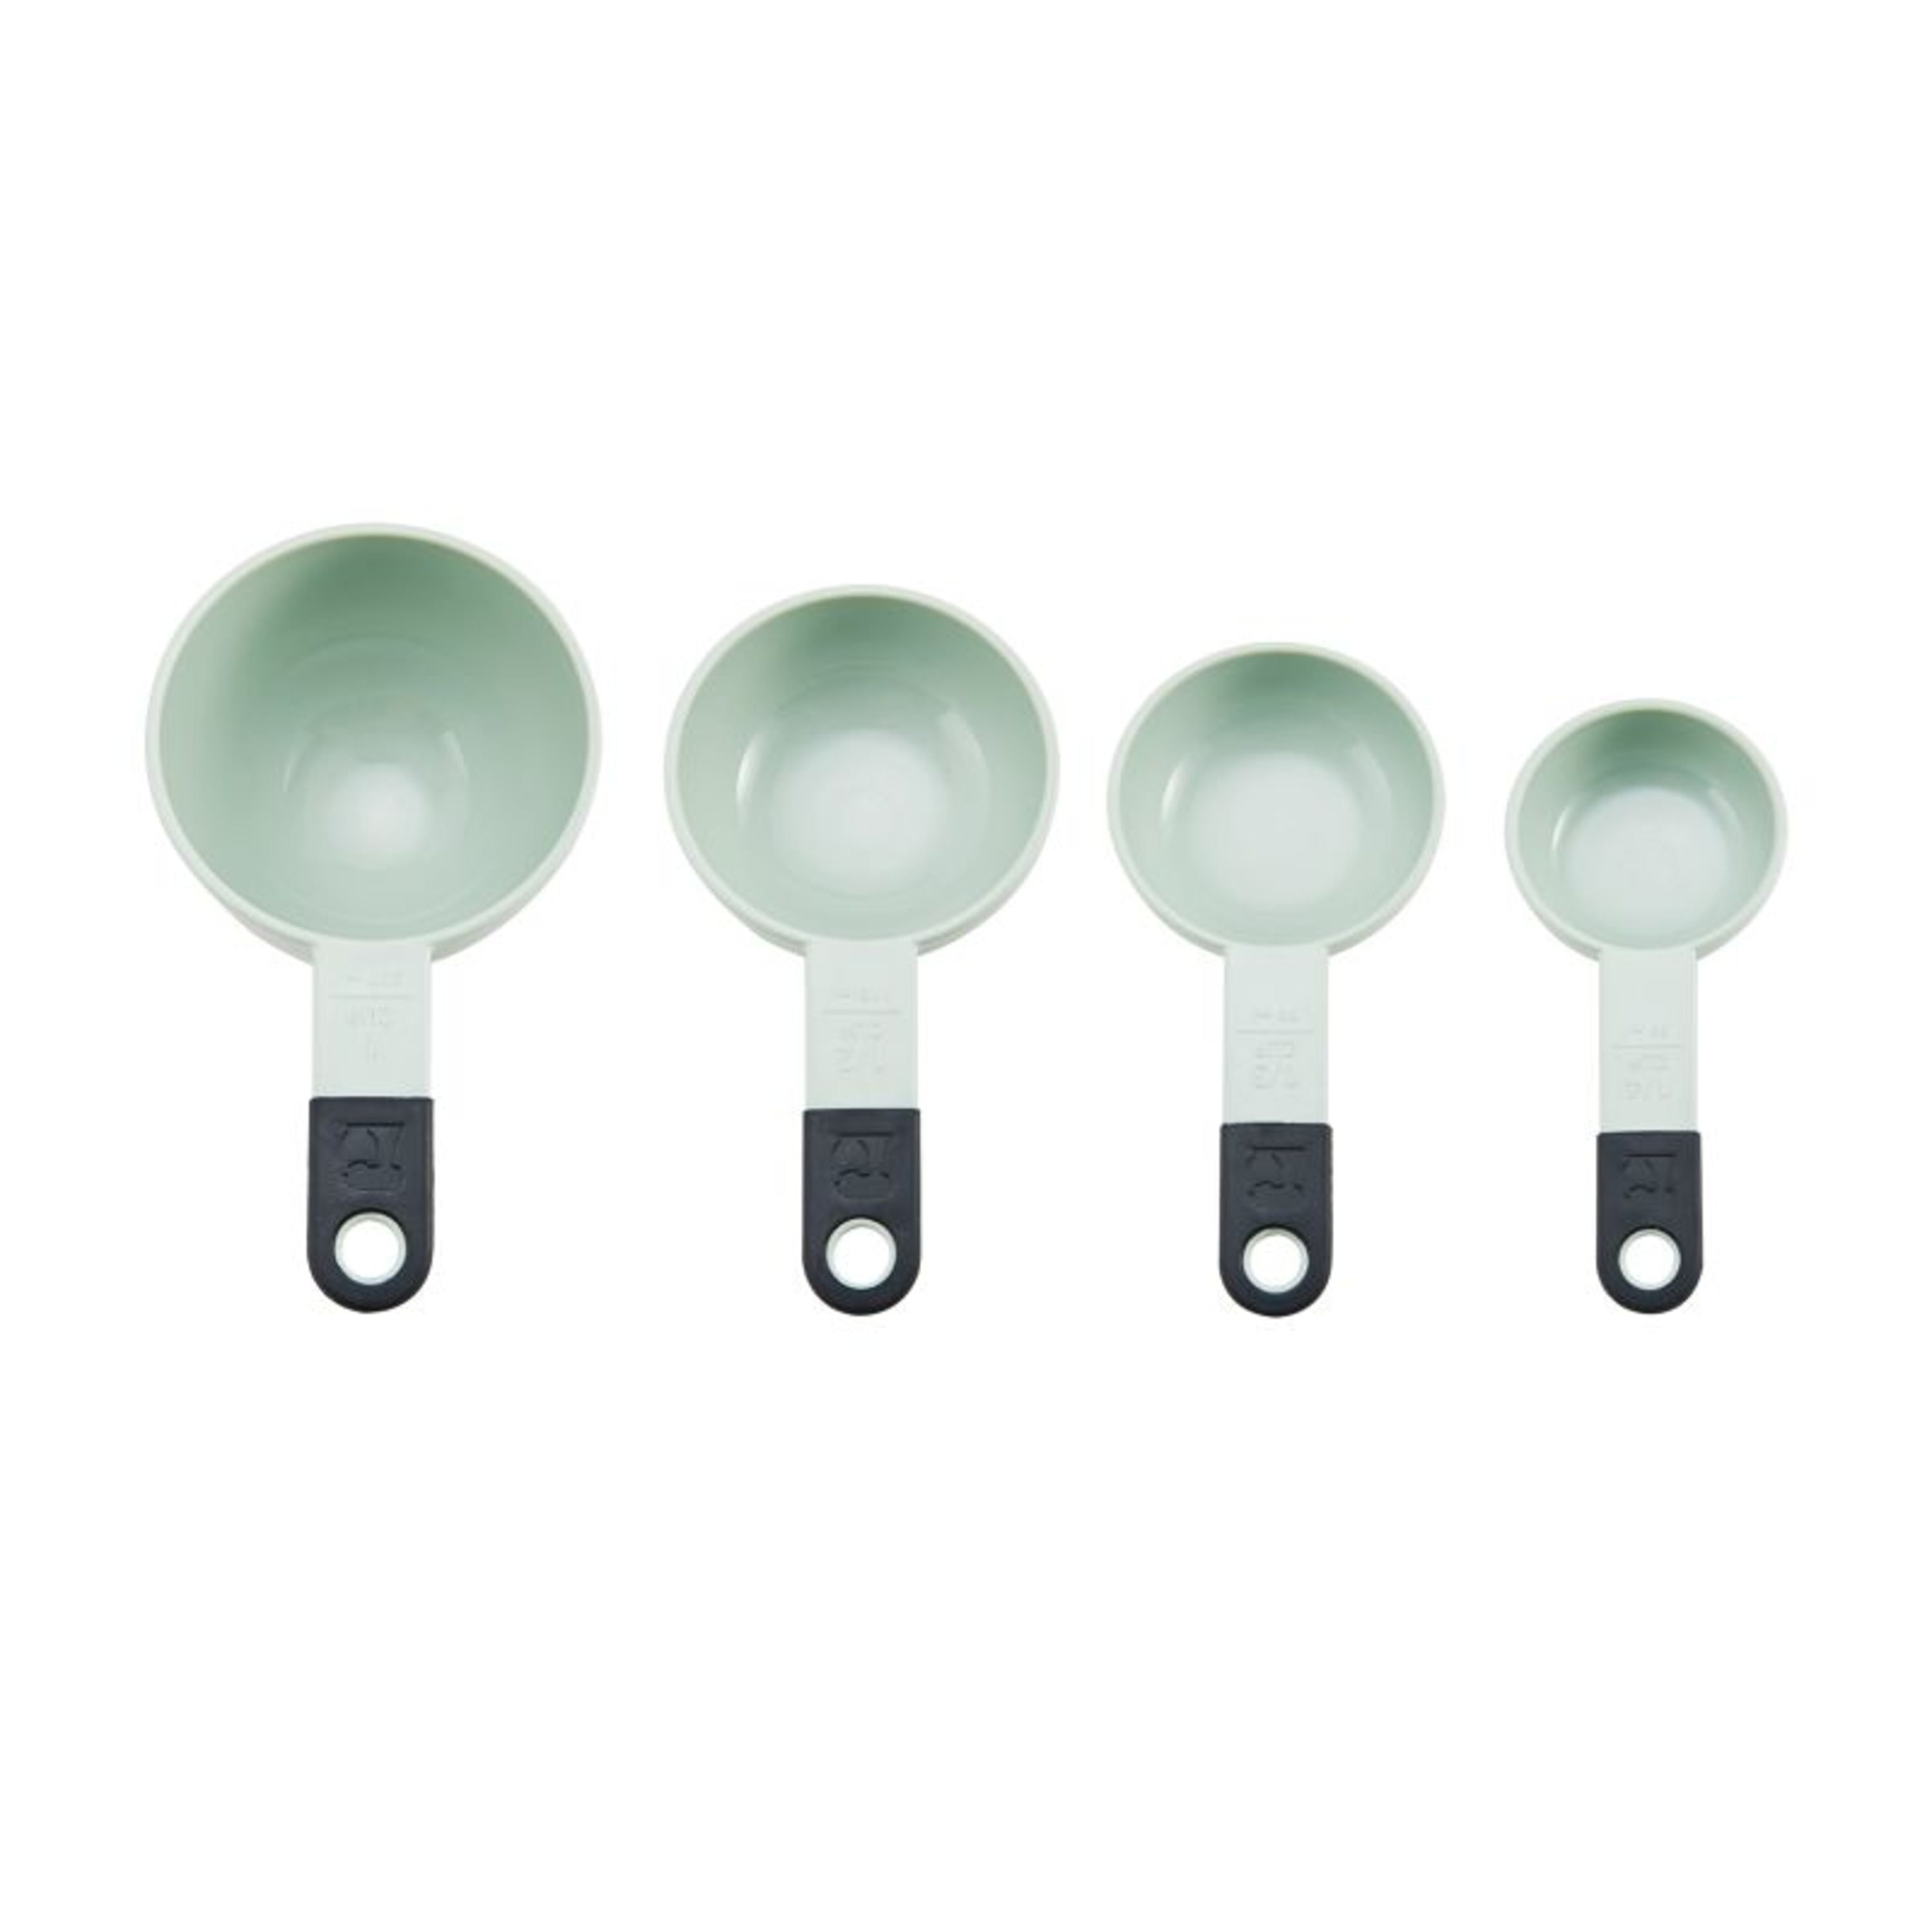 KitchenAid® Measuring Cup & Spoon Set